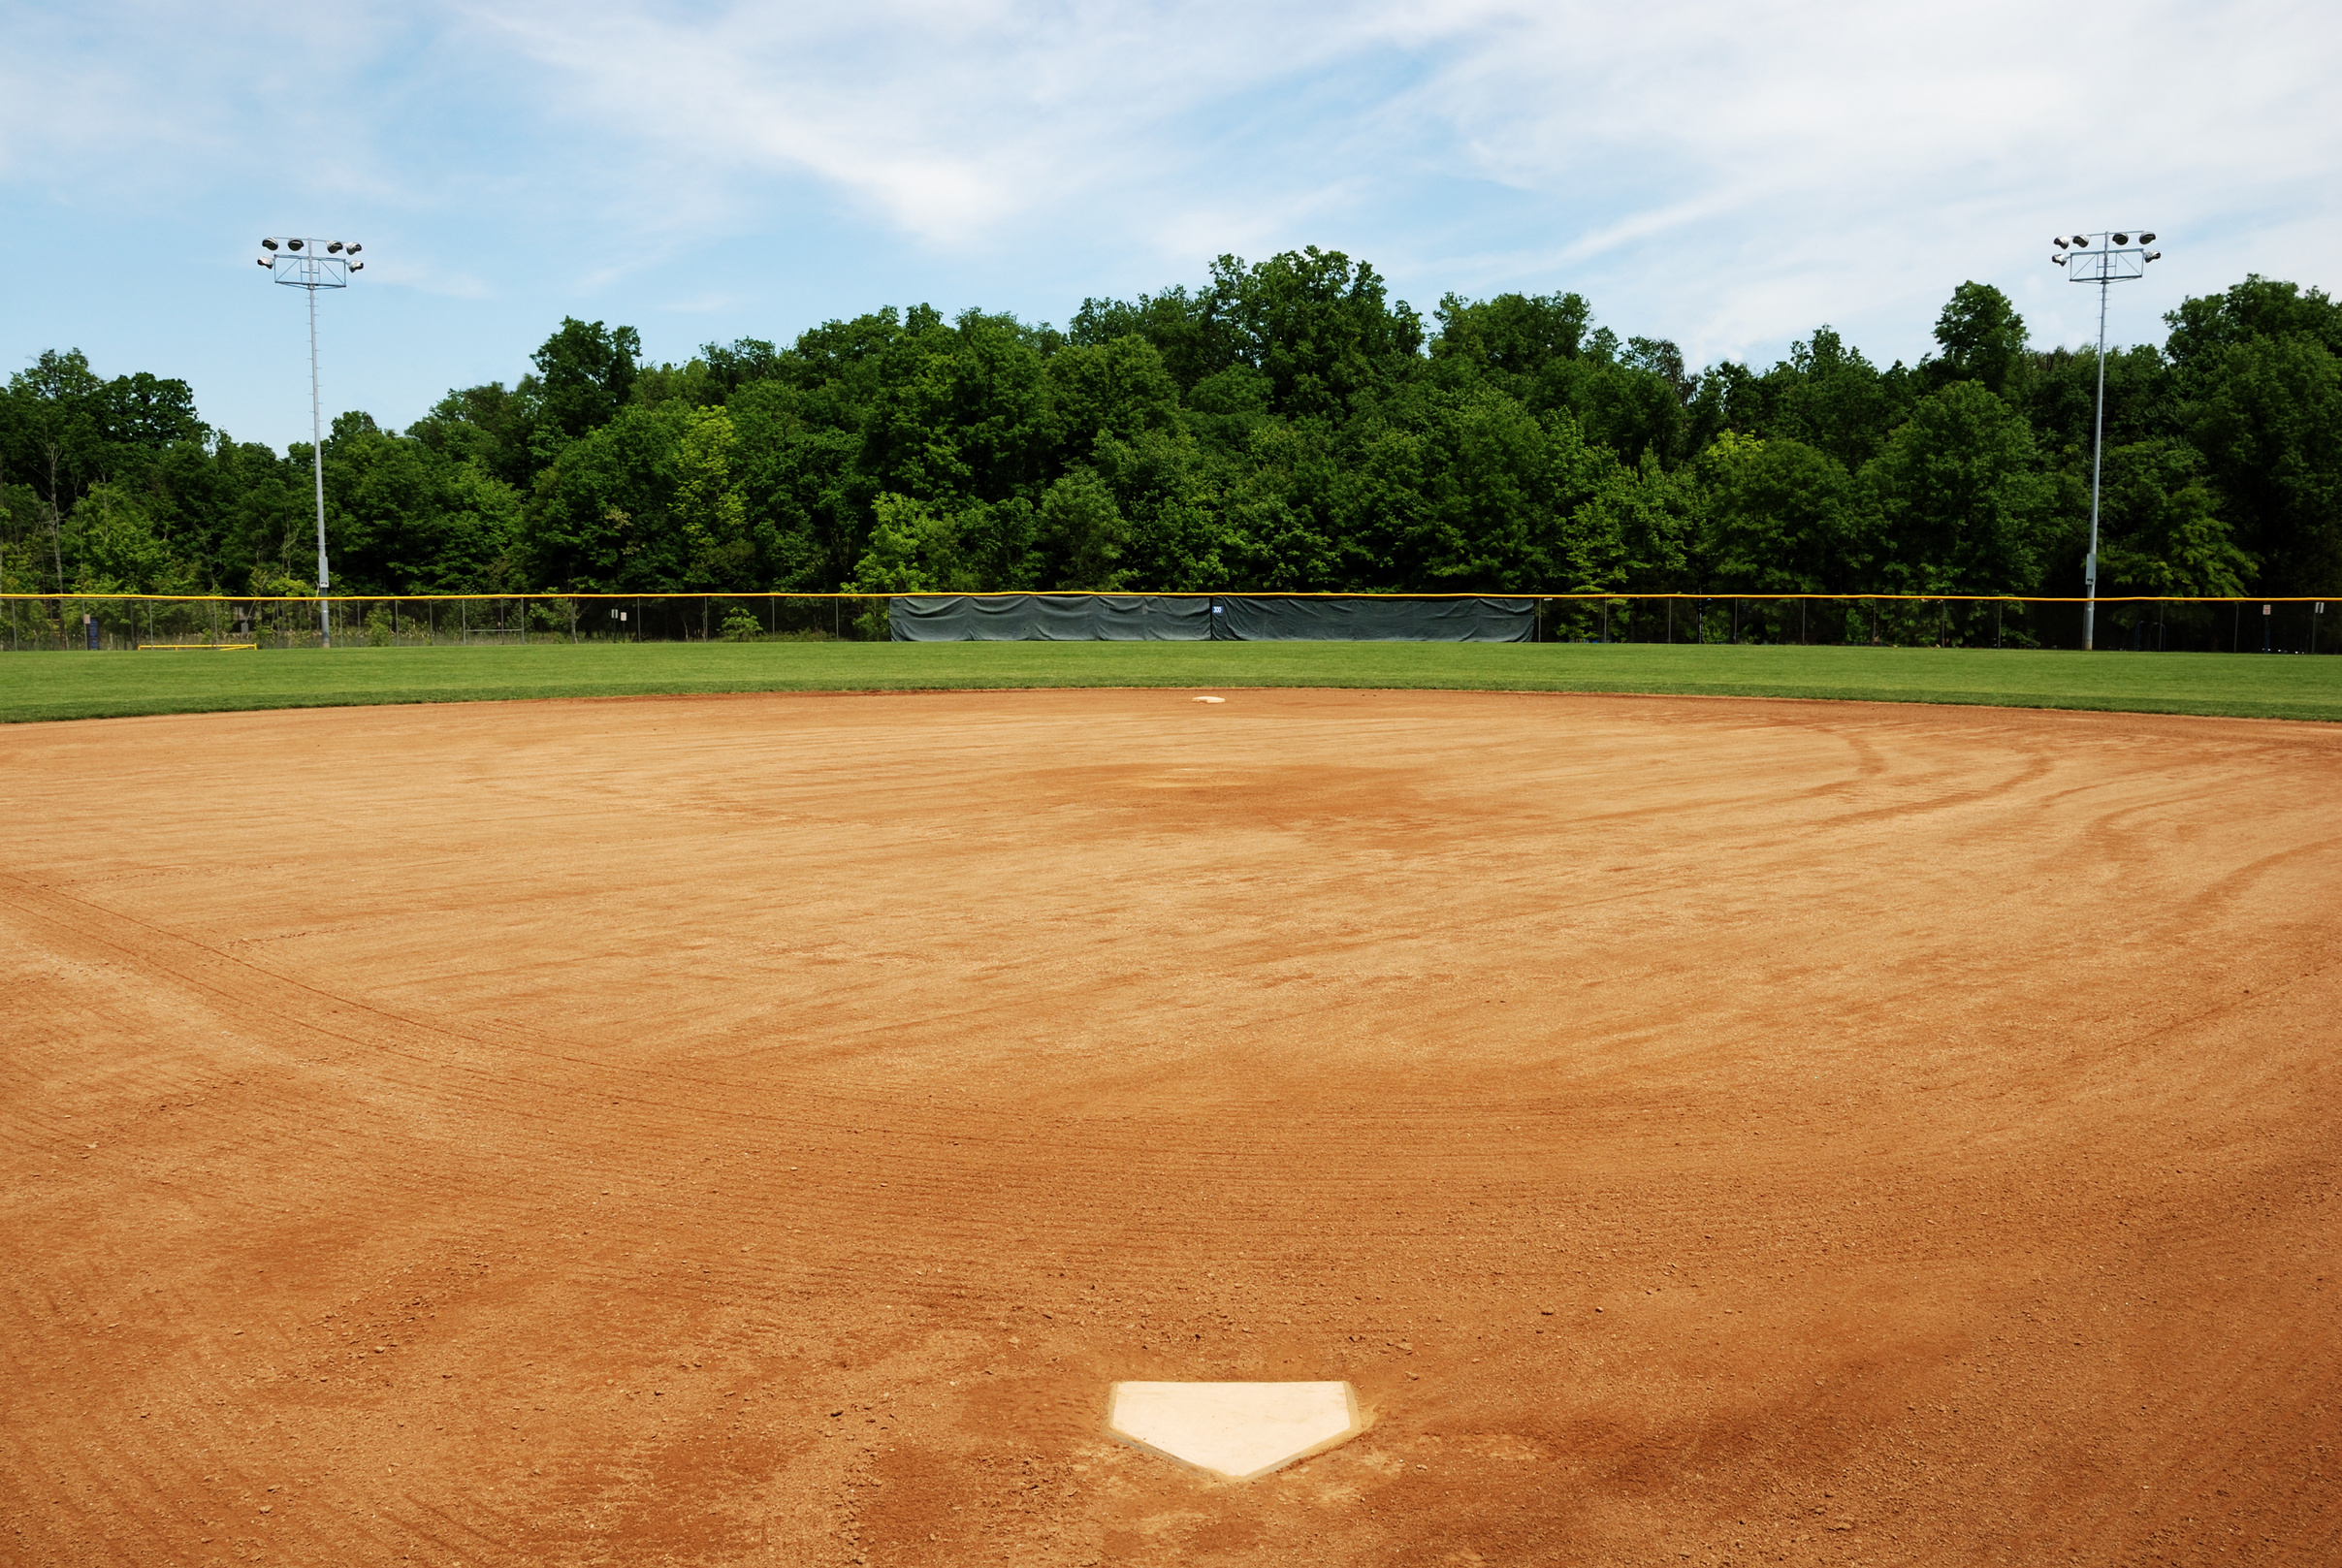 Baseball or softball field